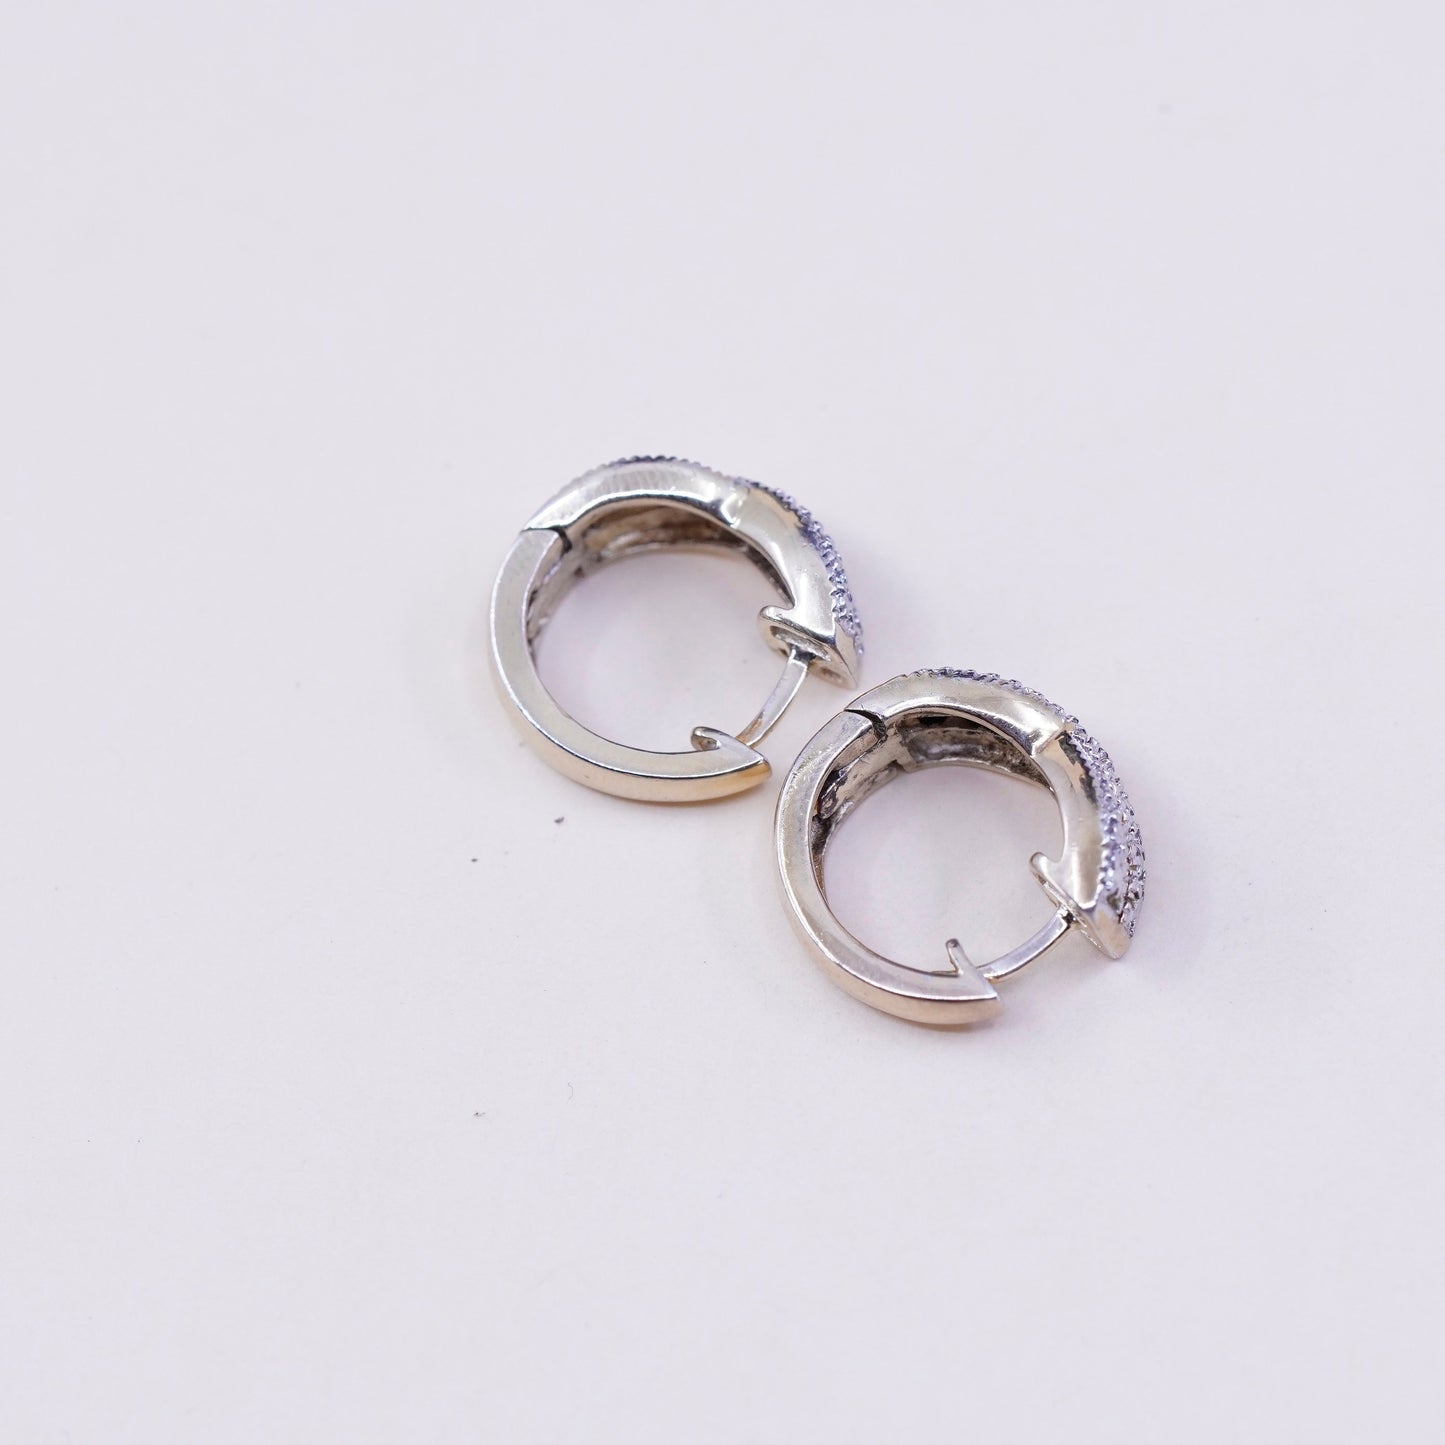 0.5”, Vintage vermeil gold over sterling silver earrings, 925 hoops, huggie, with diamond details, stamped 925